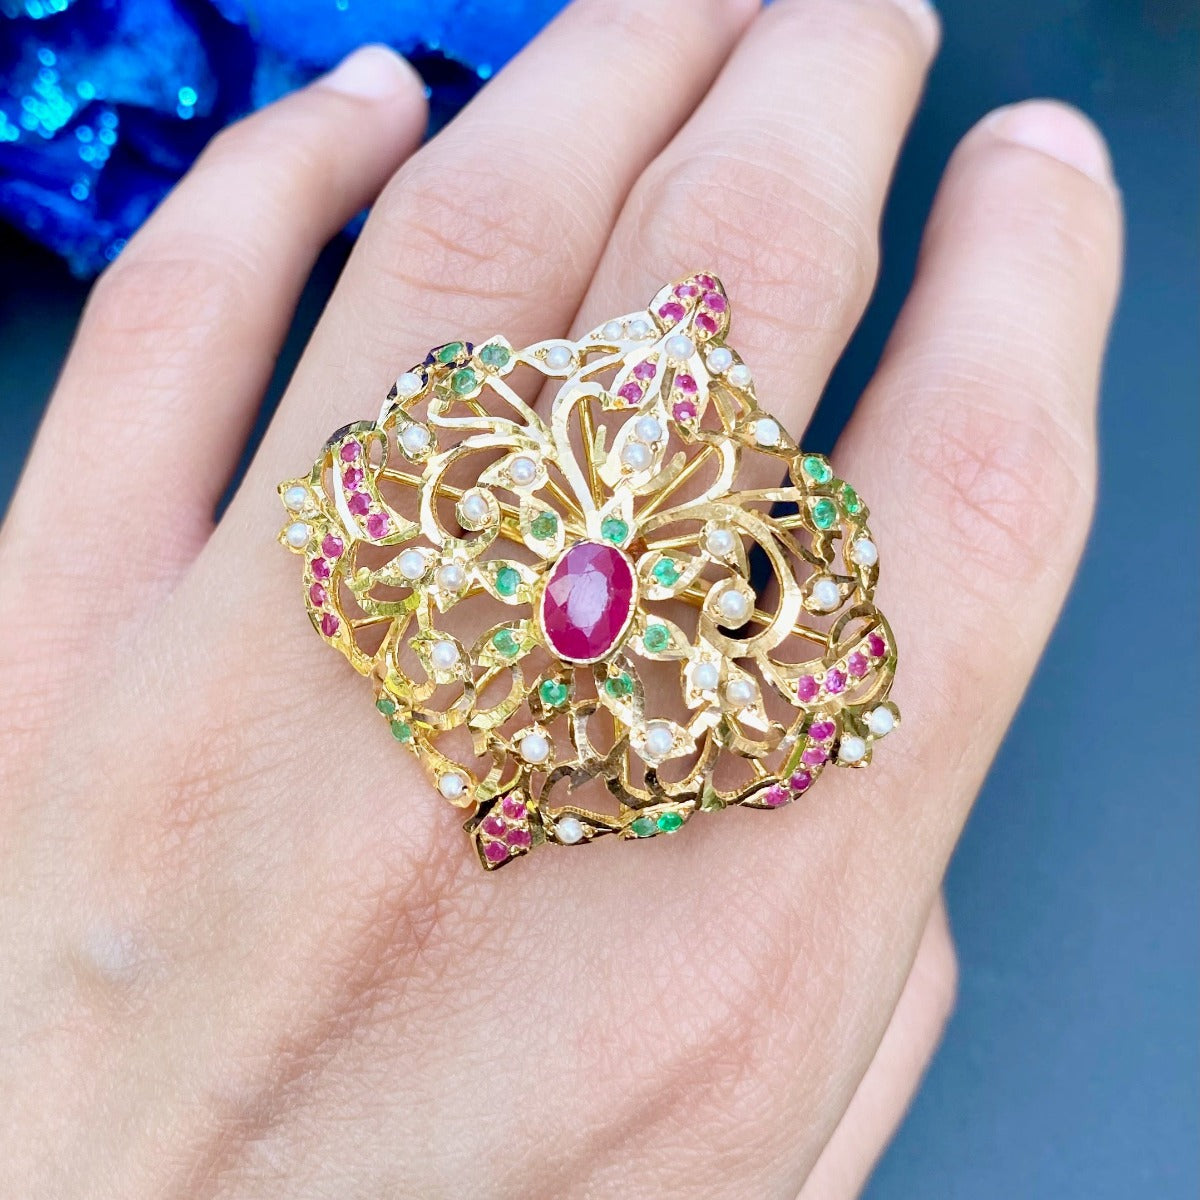 22 Carat Gold Ladies Ring | Edwardian Victorian Era Inspired Design | Antique Looks 